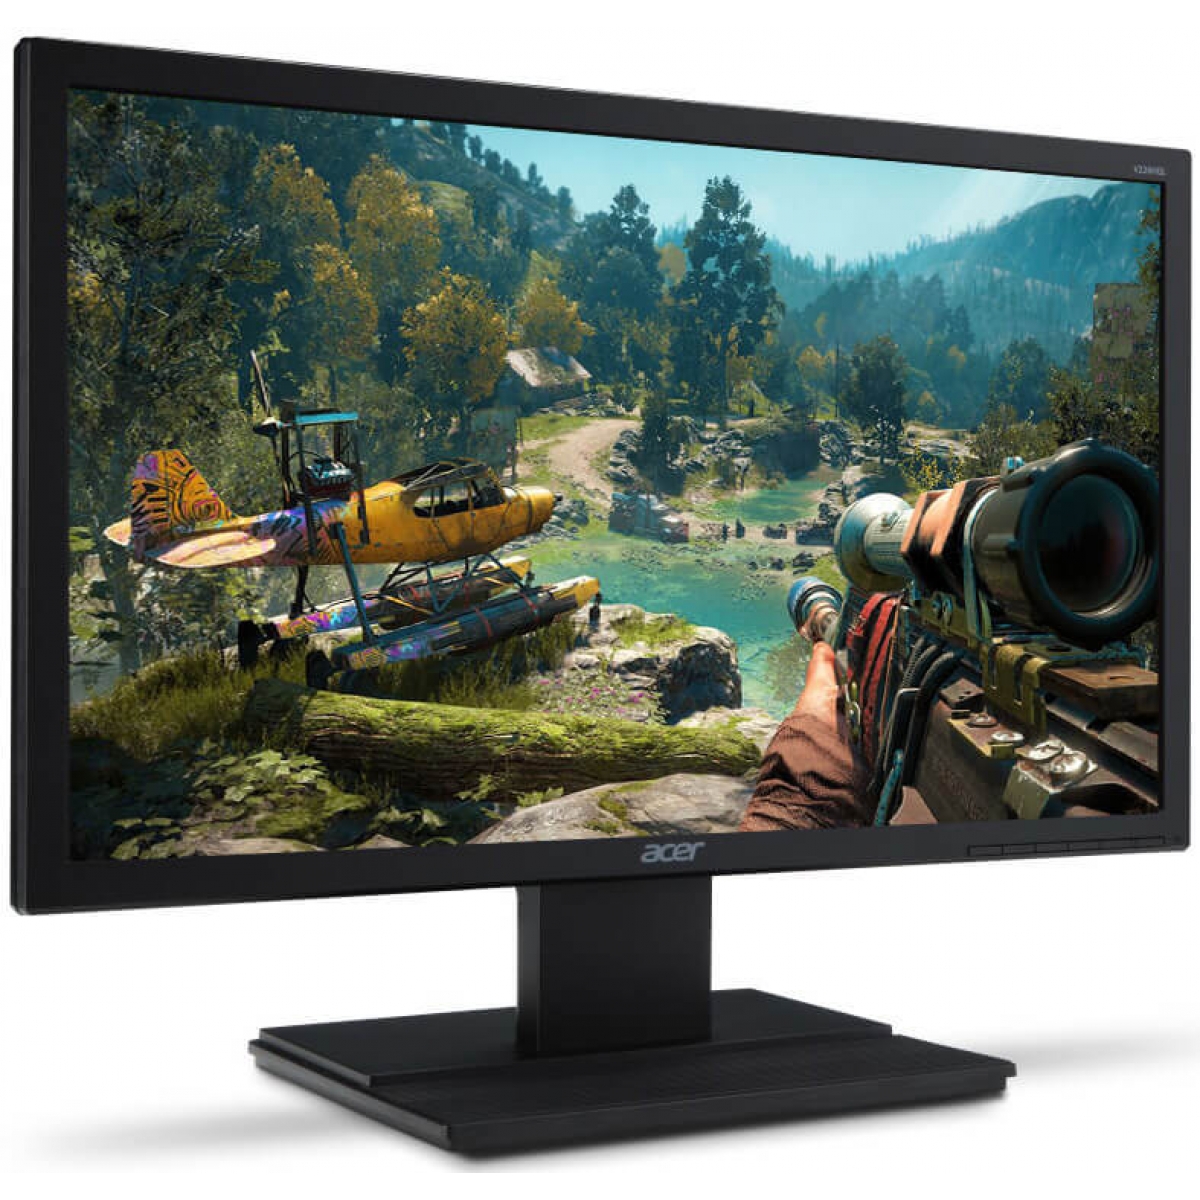 Monitor Gamer Acer 19.5 Pol, HD, HDMI, V206HQL